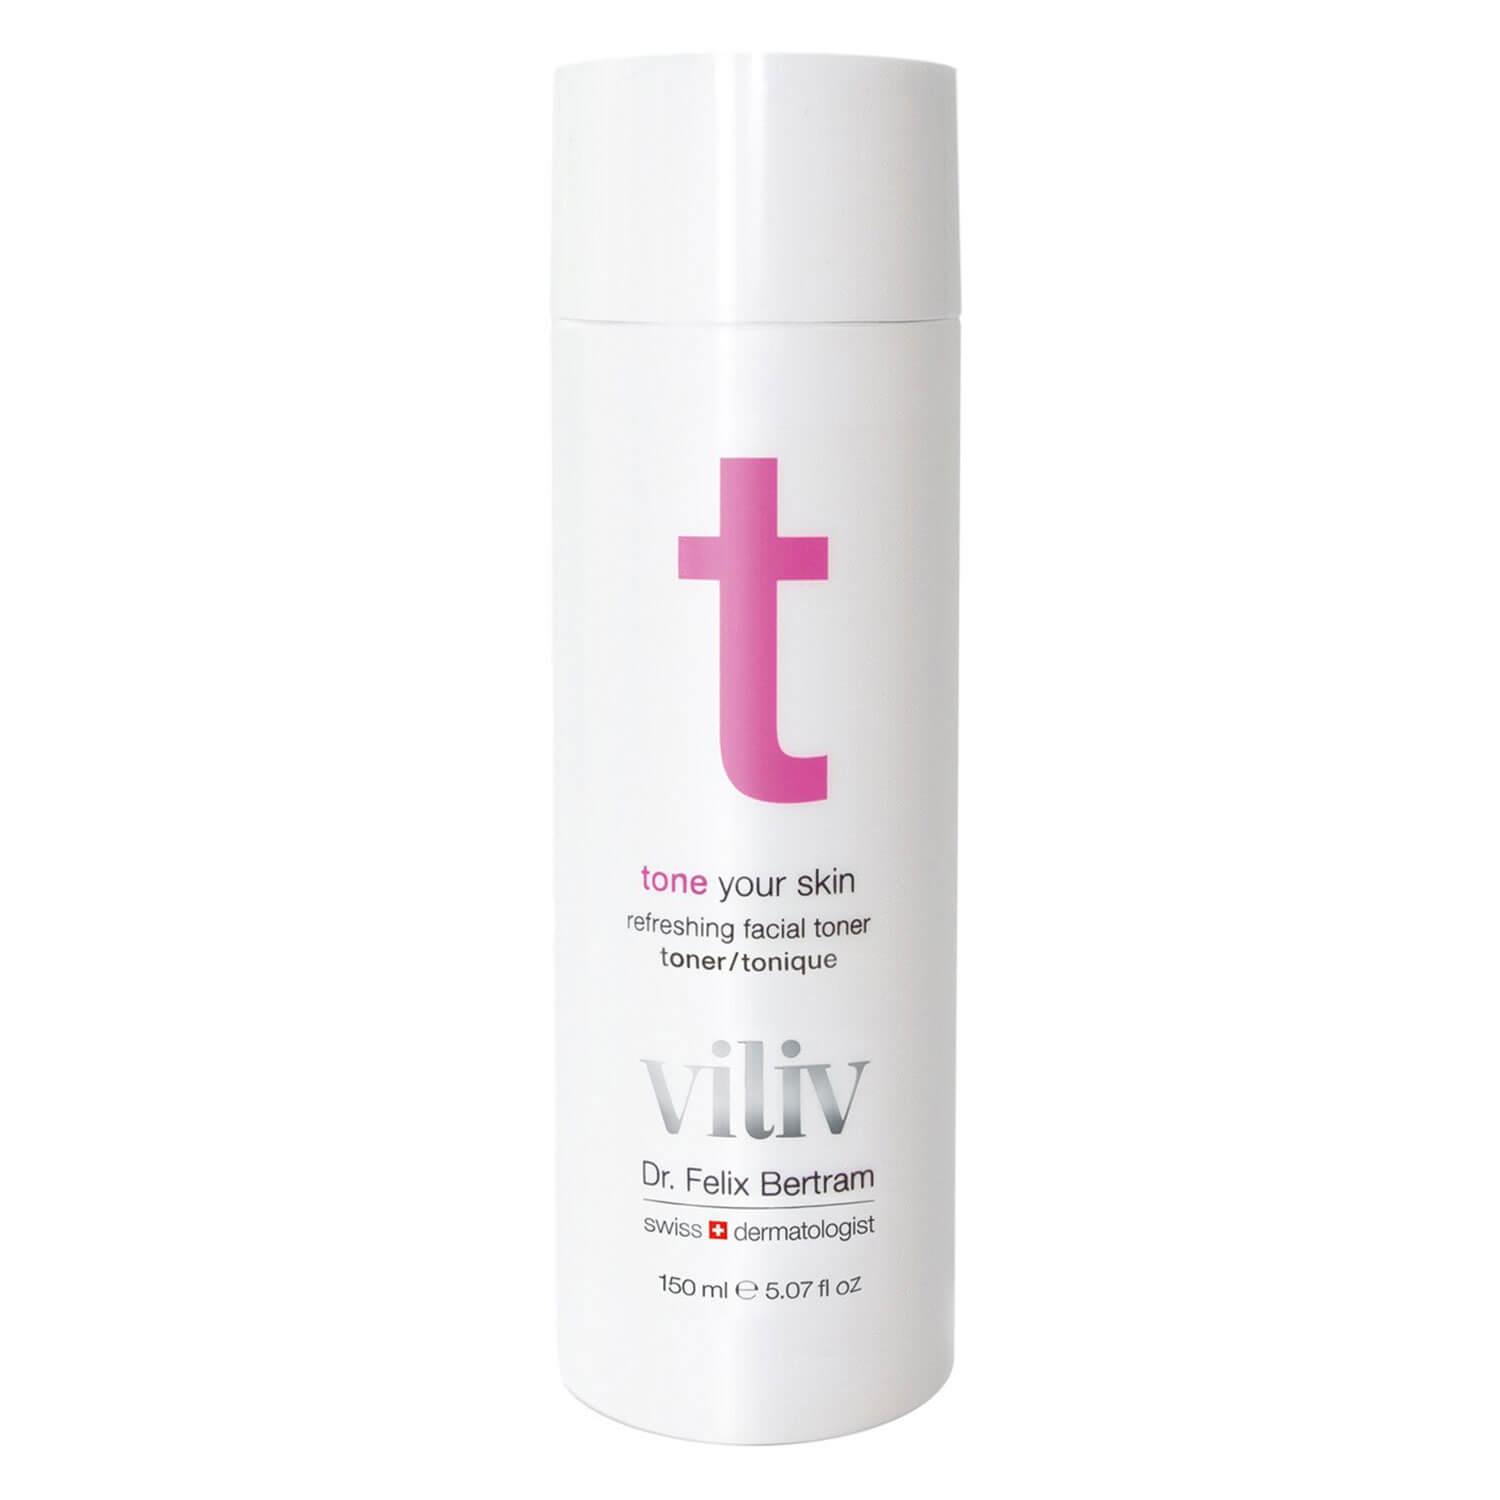 viliv - tone your skin refreshing facial toner